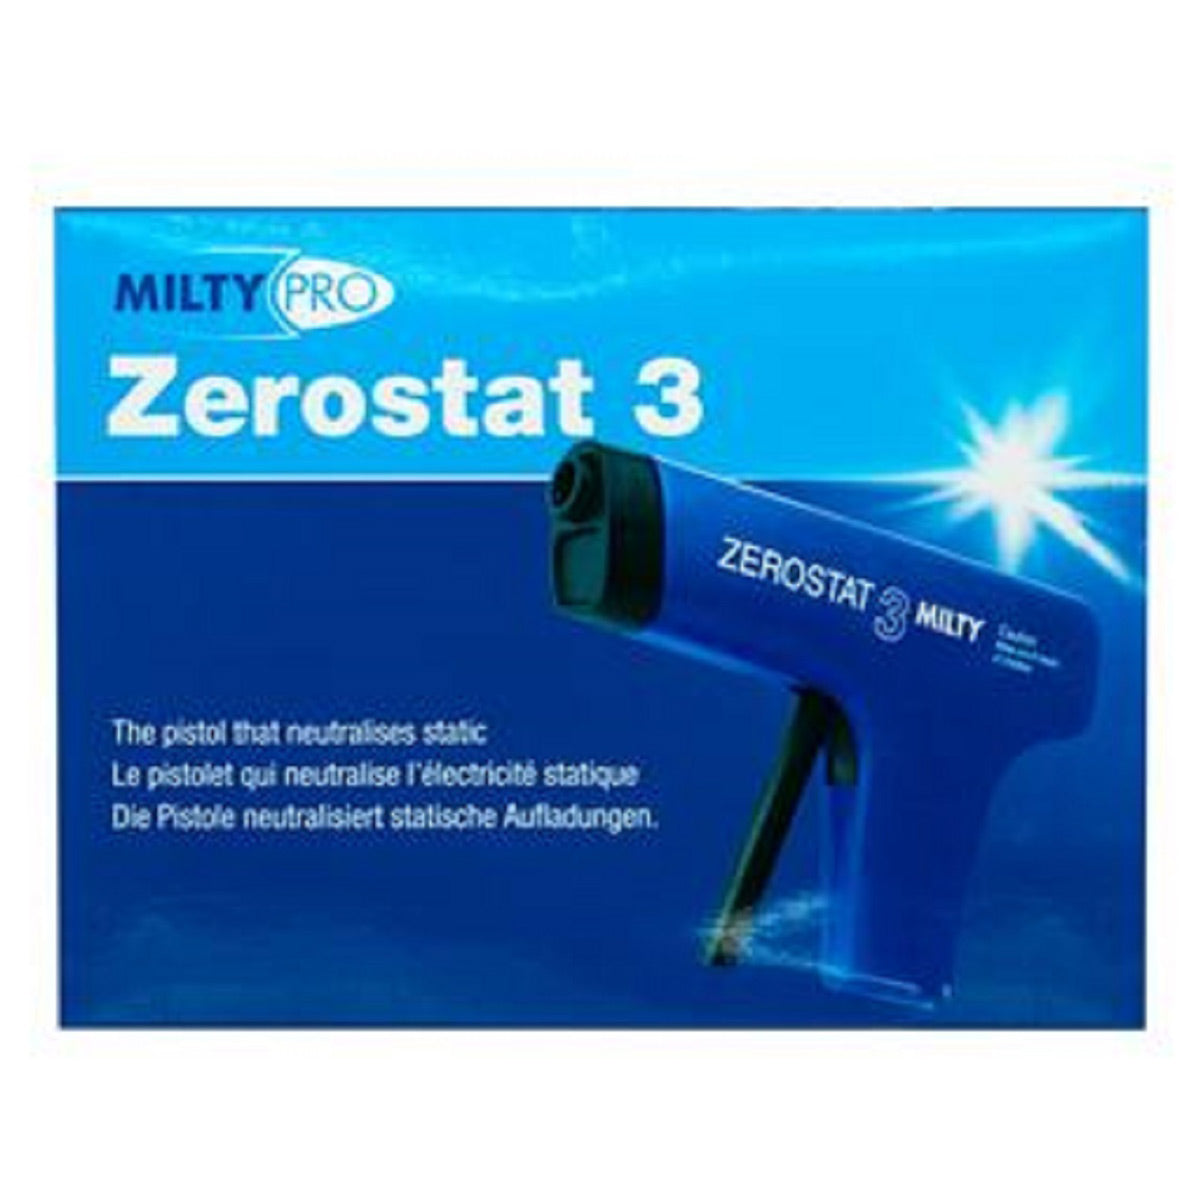 Goldring Milty Zerostat 3 Anti-Static Gun Record Cleaner - 3-Pack